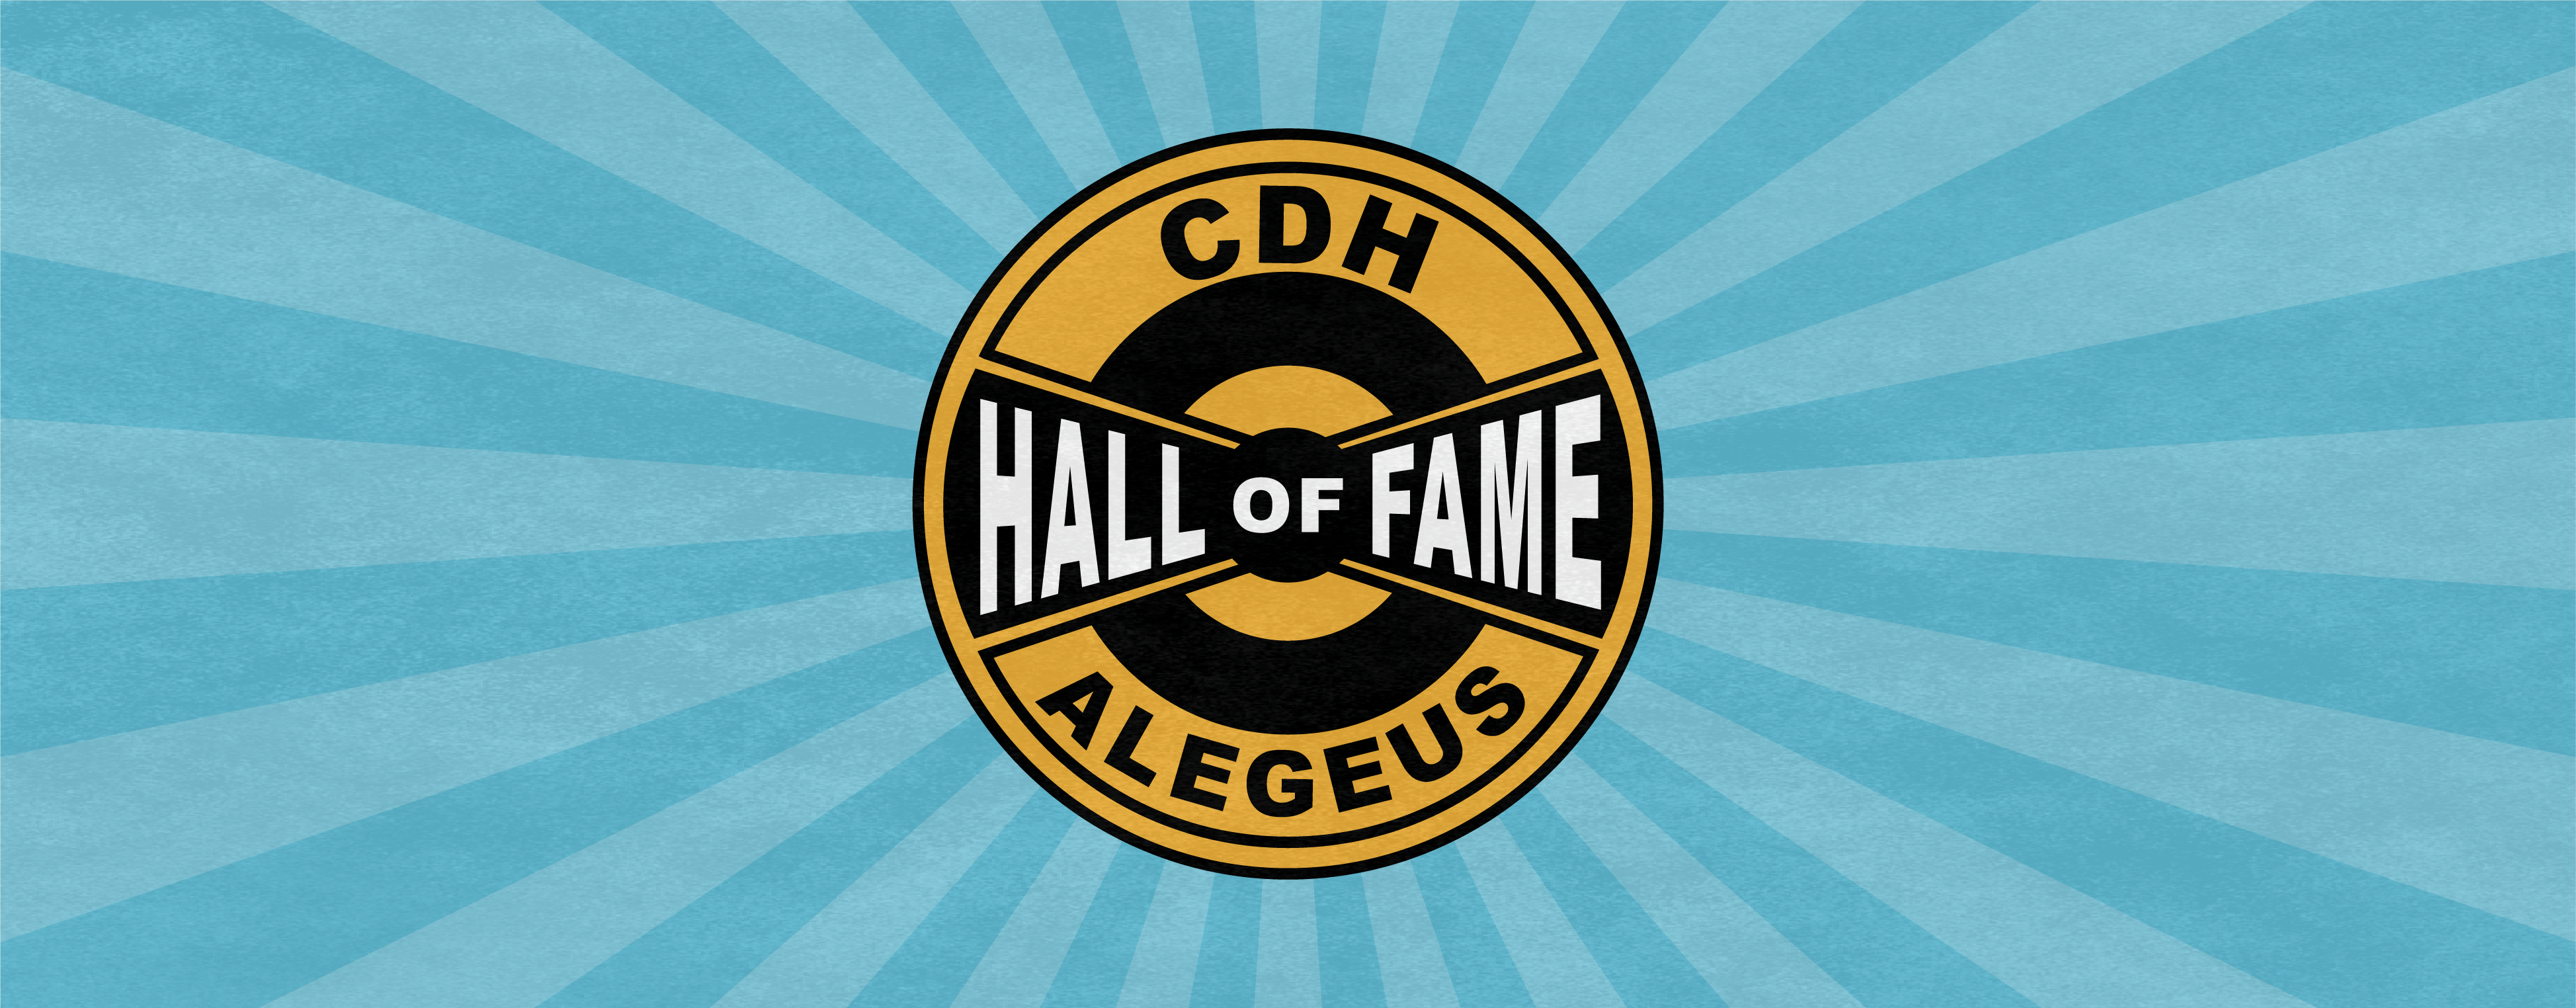 CDH Hall of Fame Logo